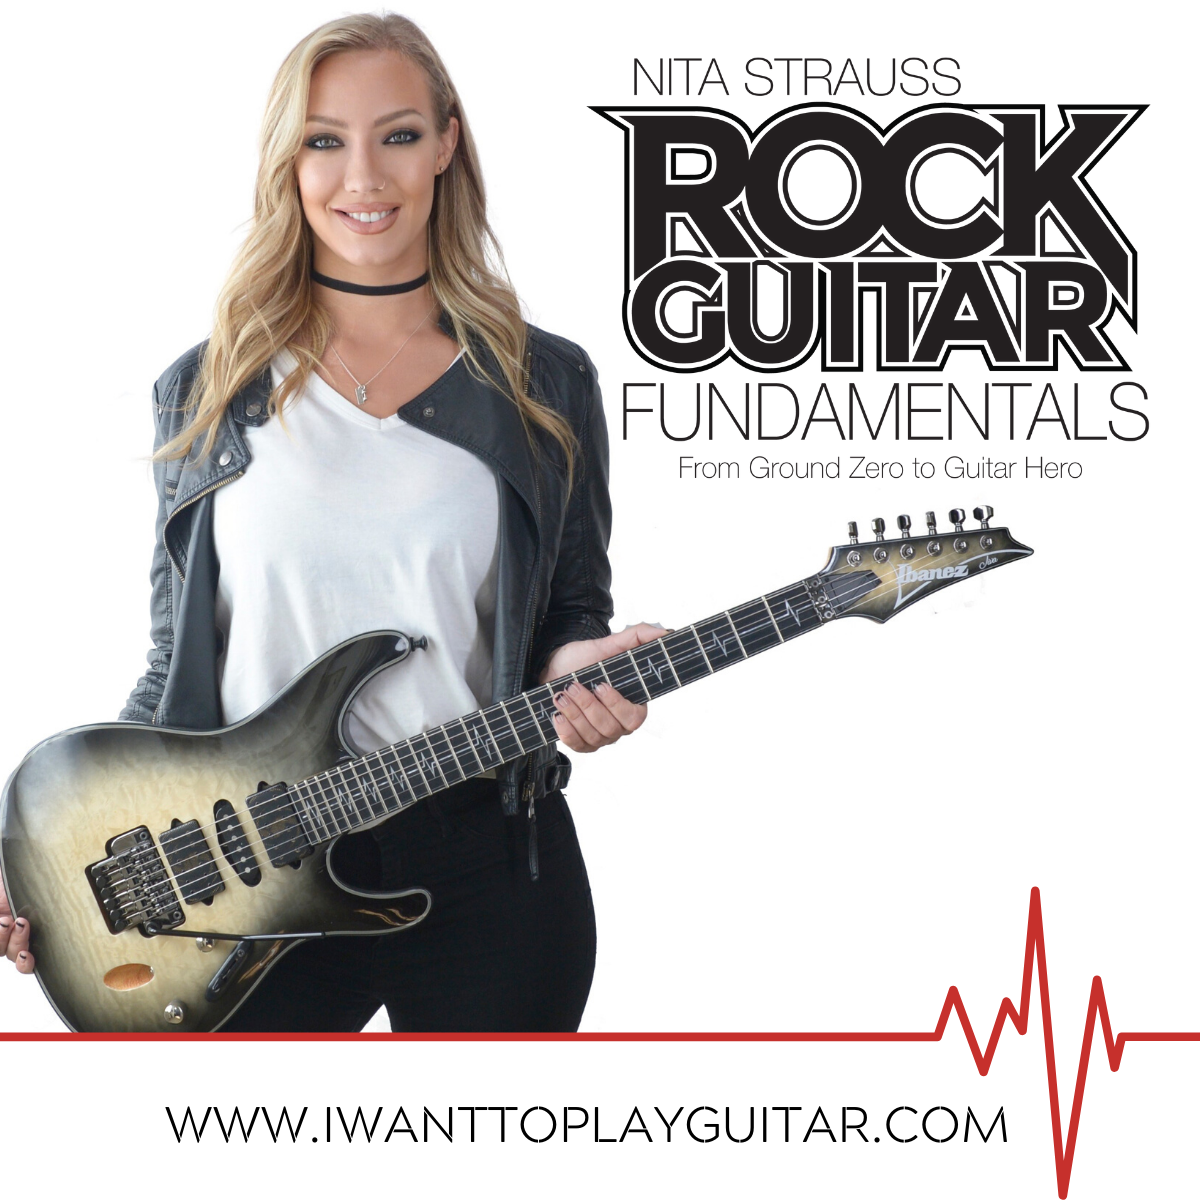 NITA STRAUSS Launches Rock Guitar Fundamentals